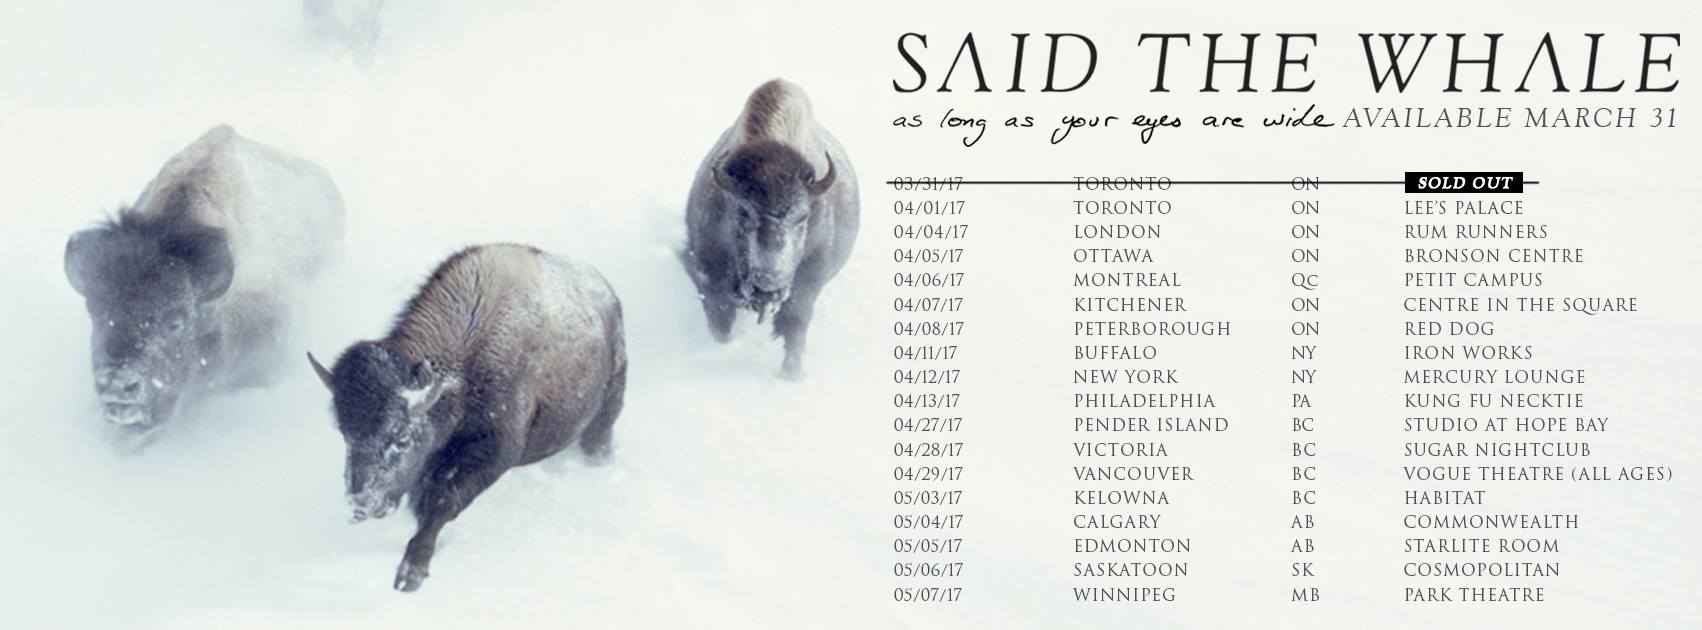 Said the Whale 2017 tour dates